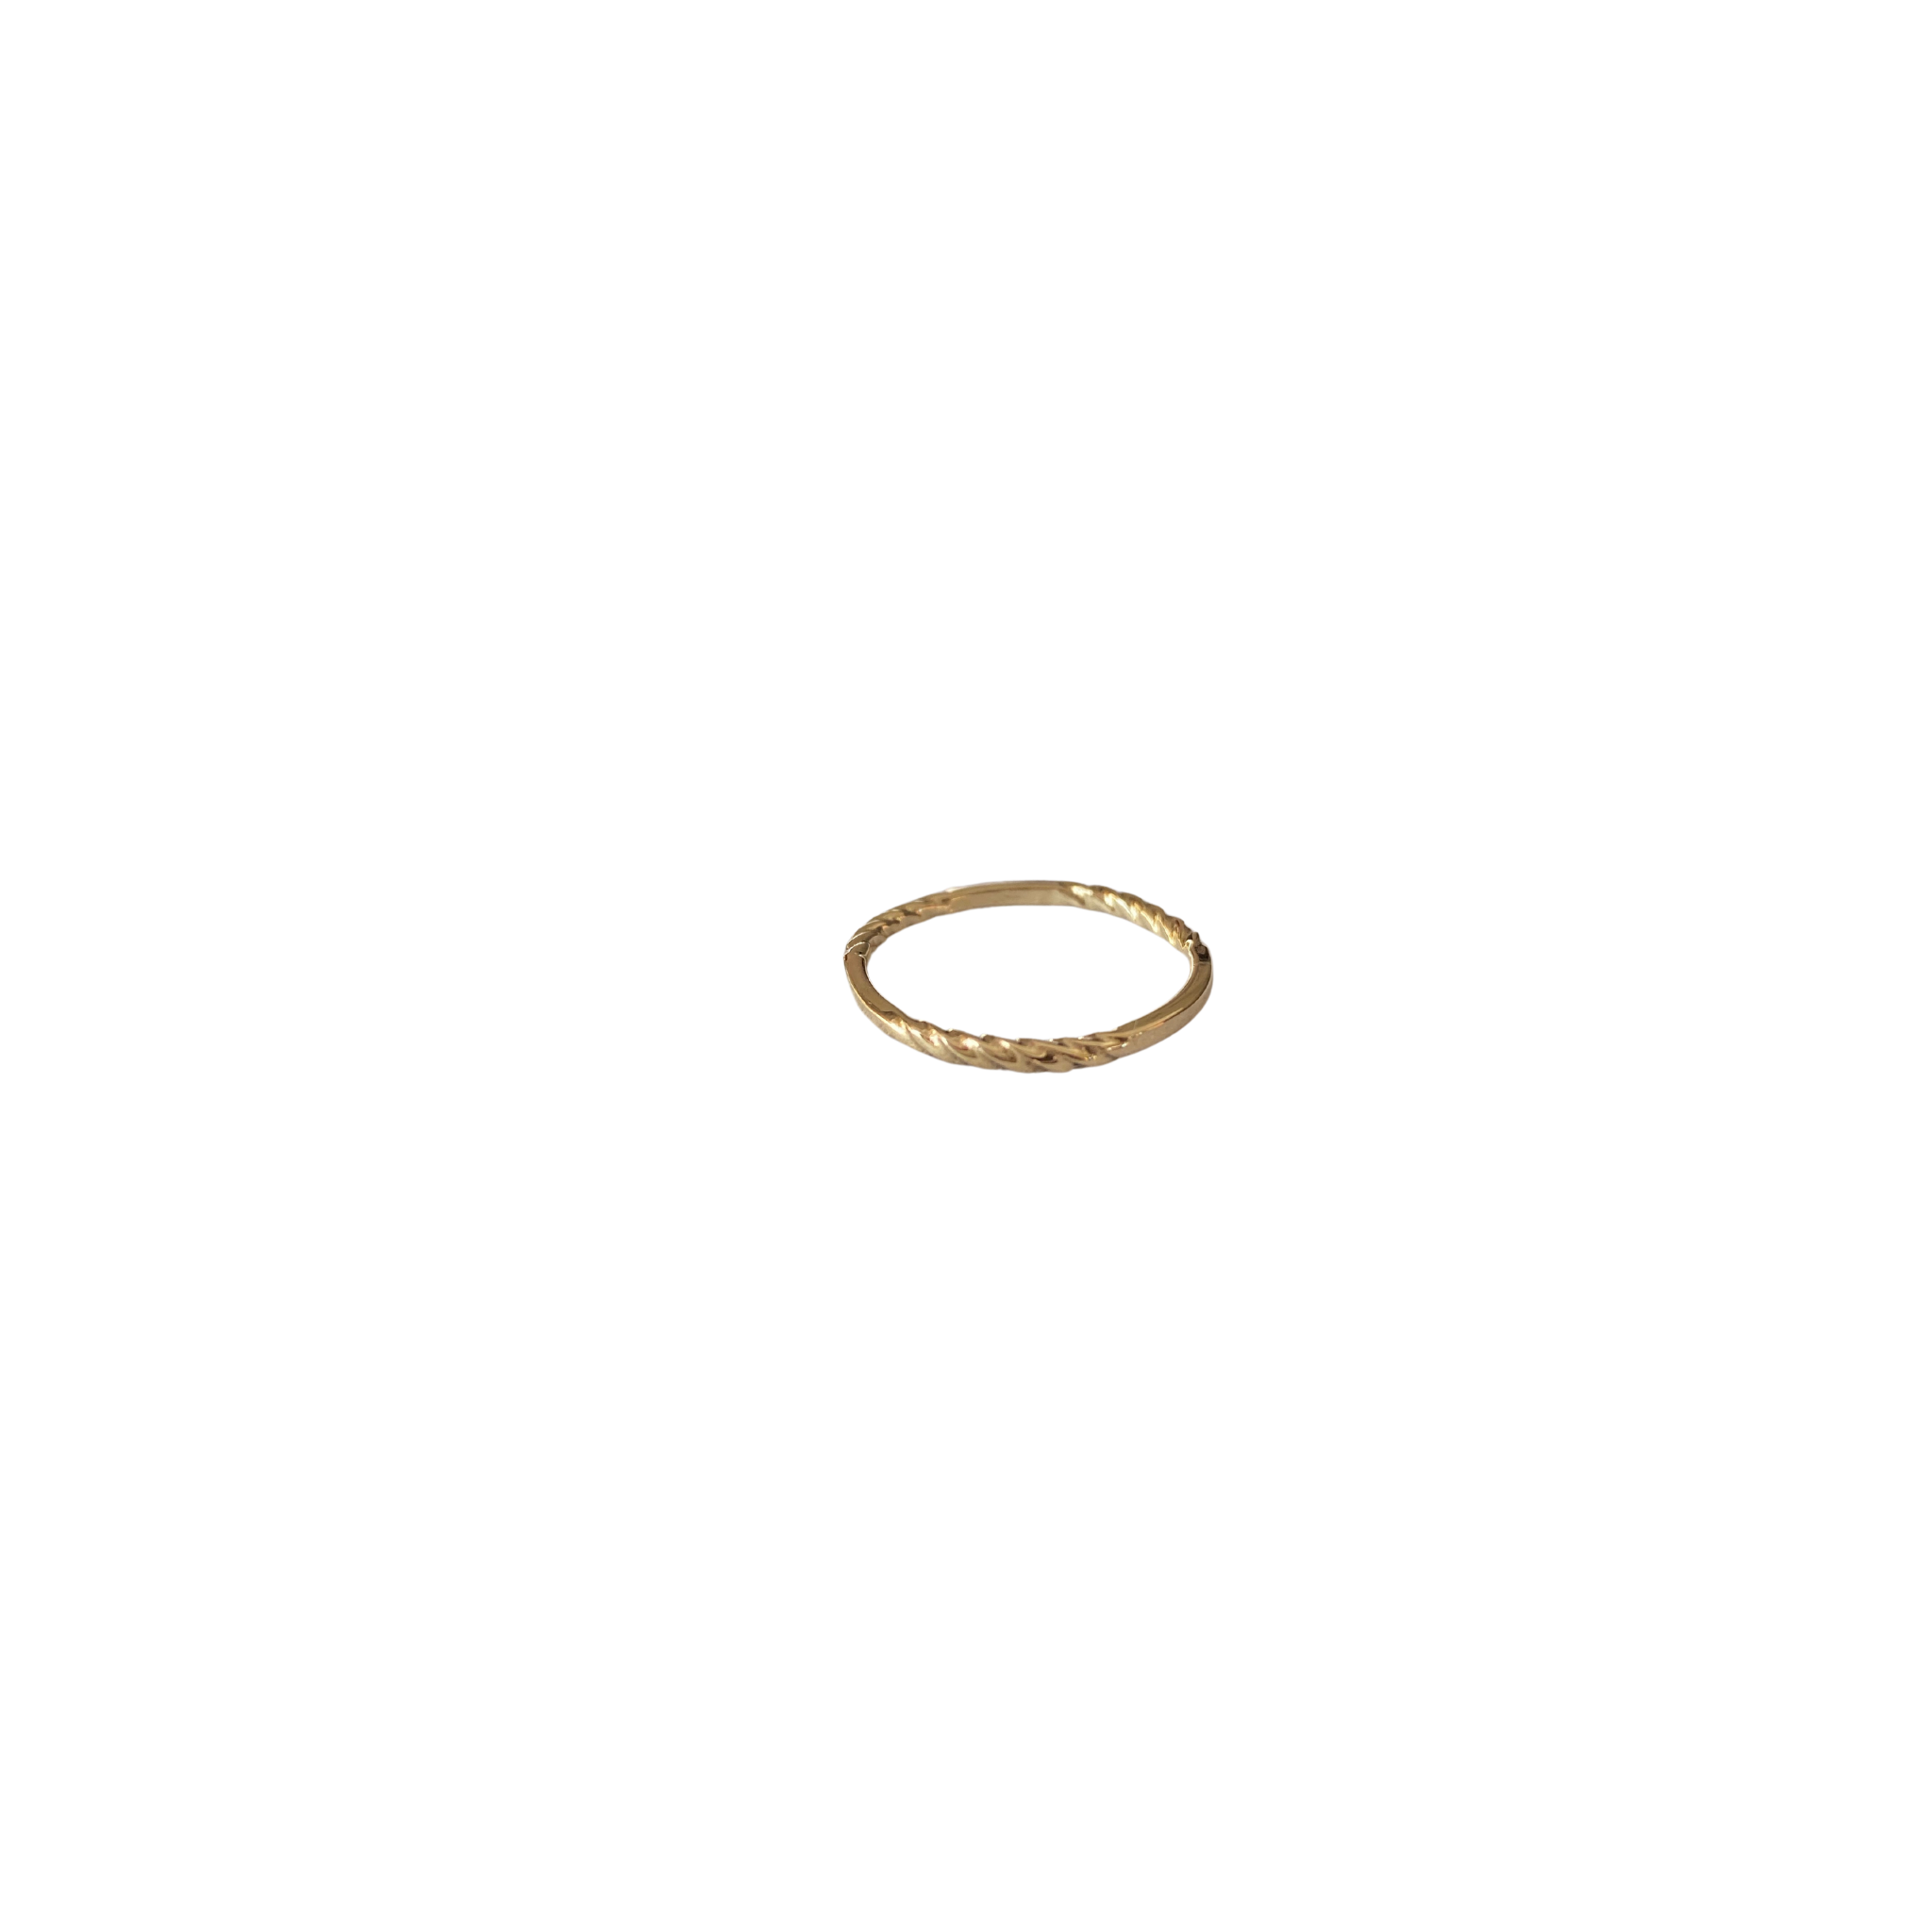 Segmented twist ring